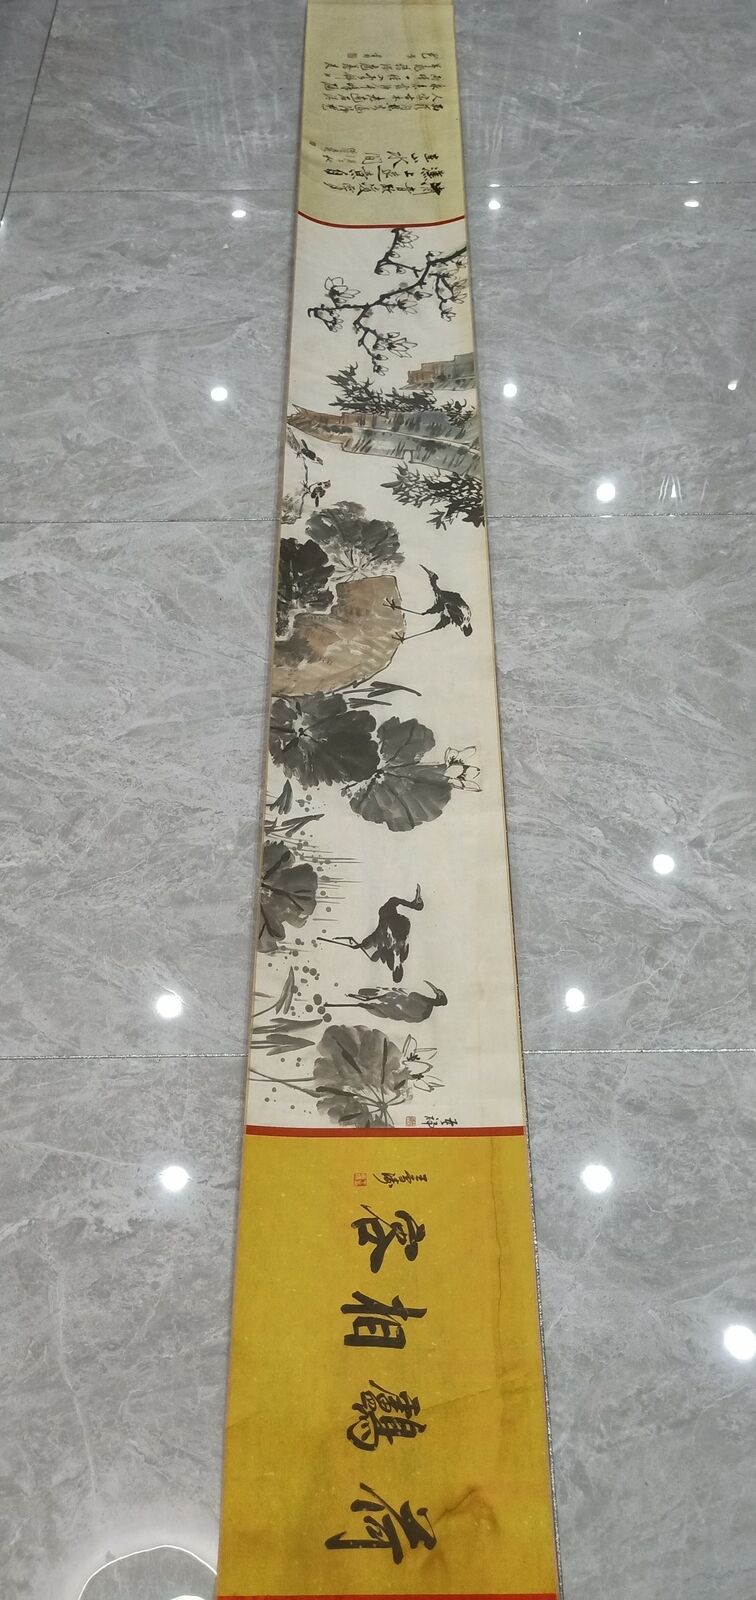 140" Chinese Xuan Paper Lotus Leaf Crane '李若禅荷鹤相容图' Long Scrolls Painting